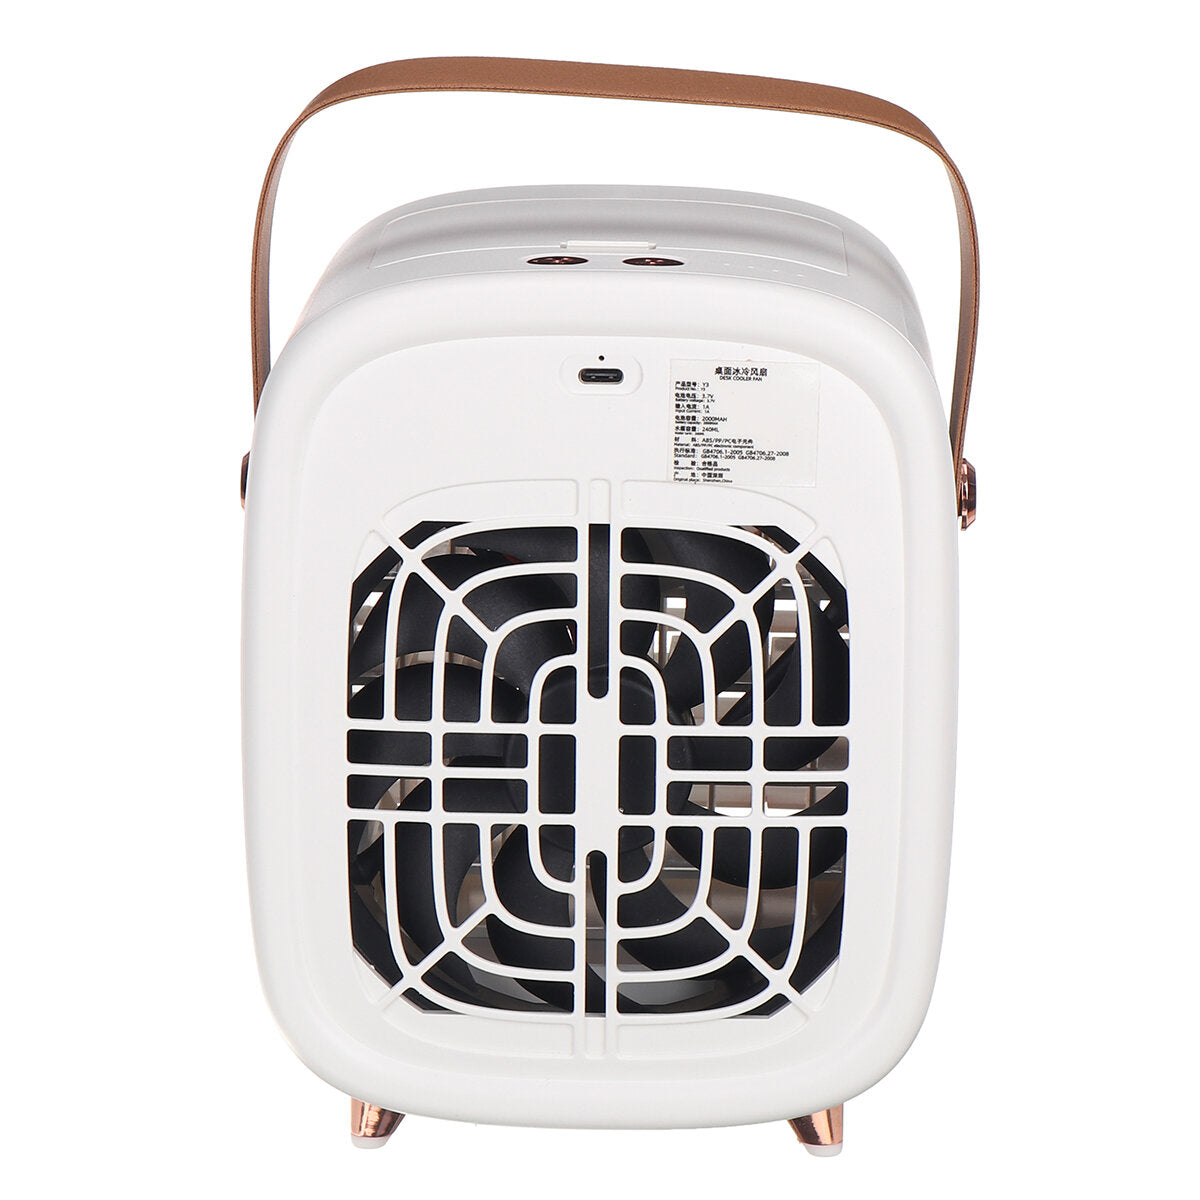 Portable Air Conditioner Cooler Fan Humidifier USB Desk Desktop Bedroom